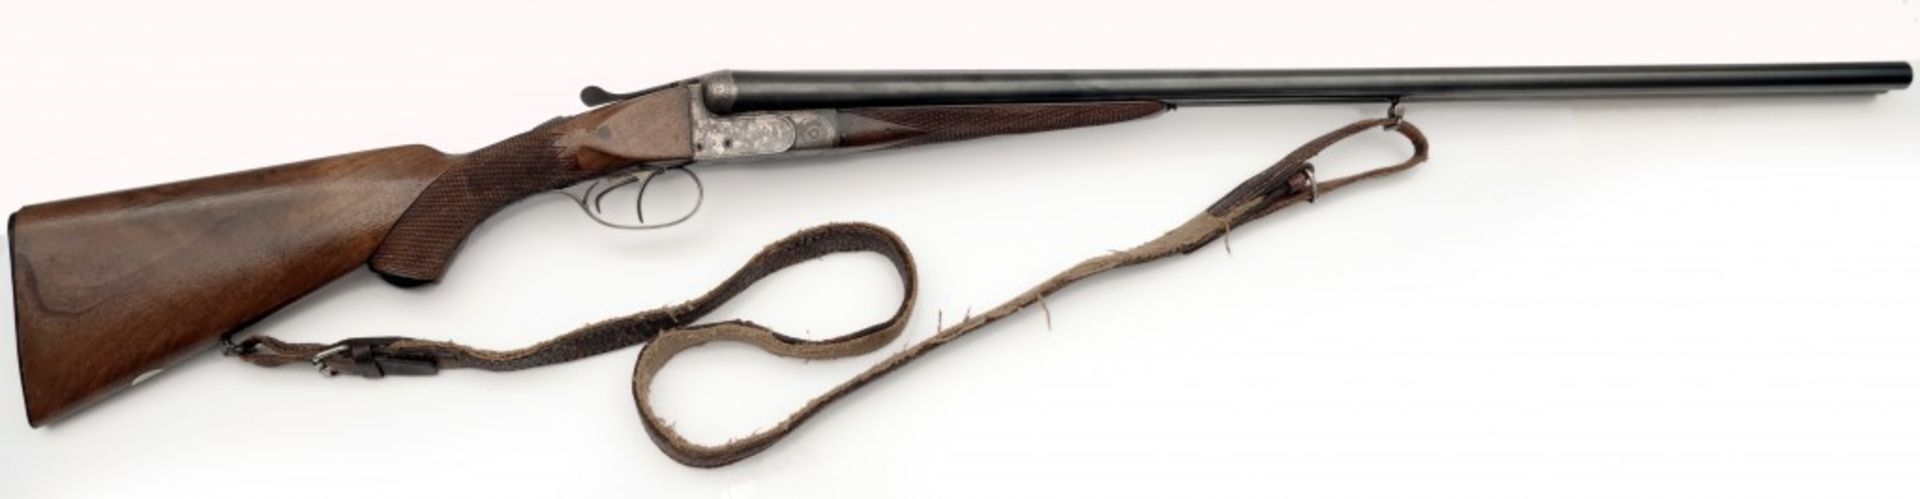 A Double-barrelled Shotgun, Ferdinand Fückert, Troppau (Opava) - Image 3 of 6